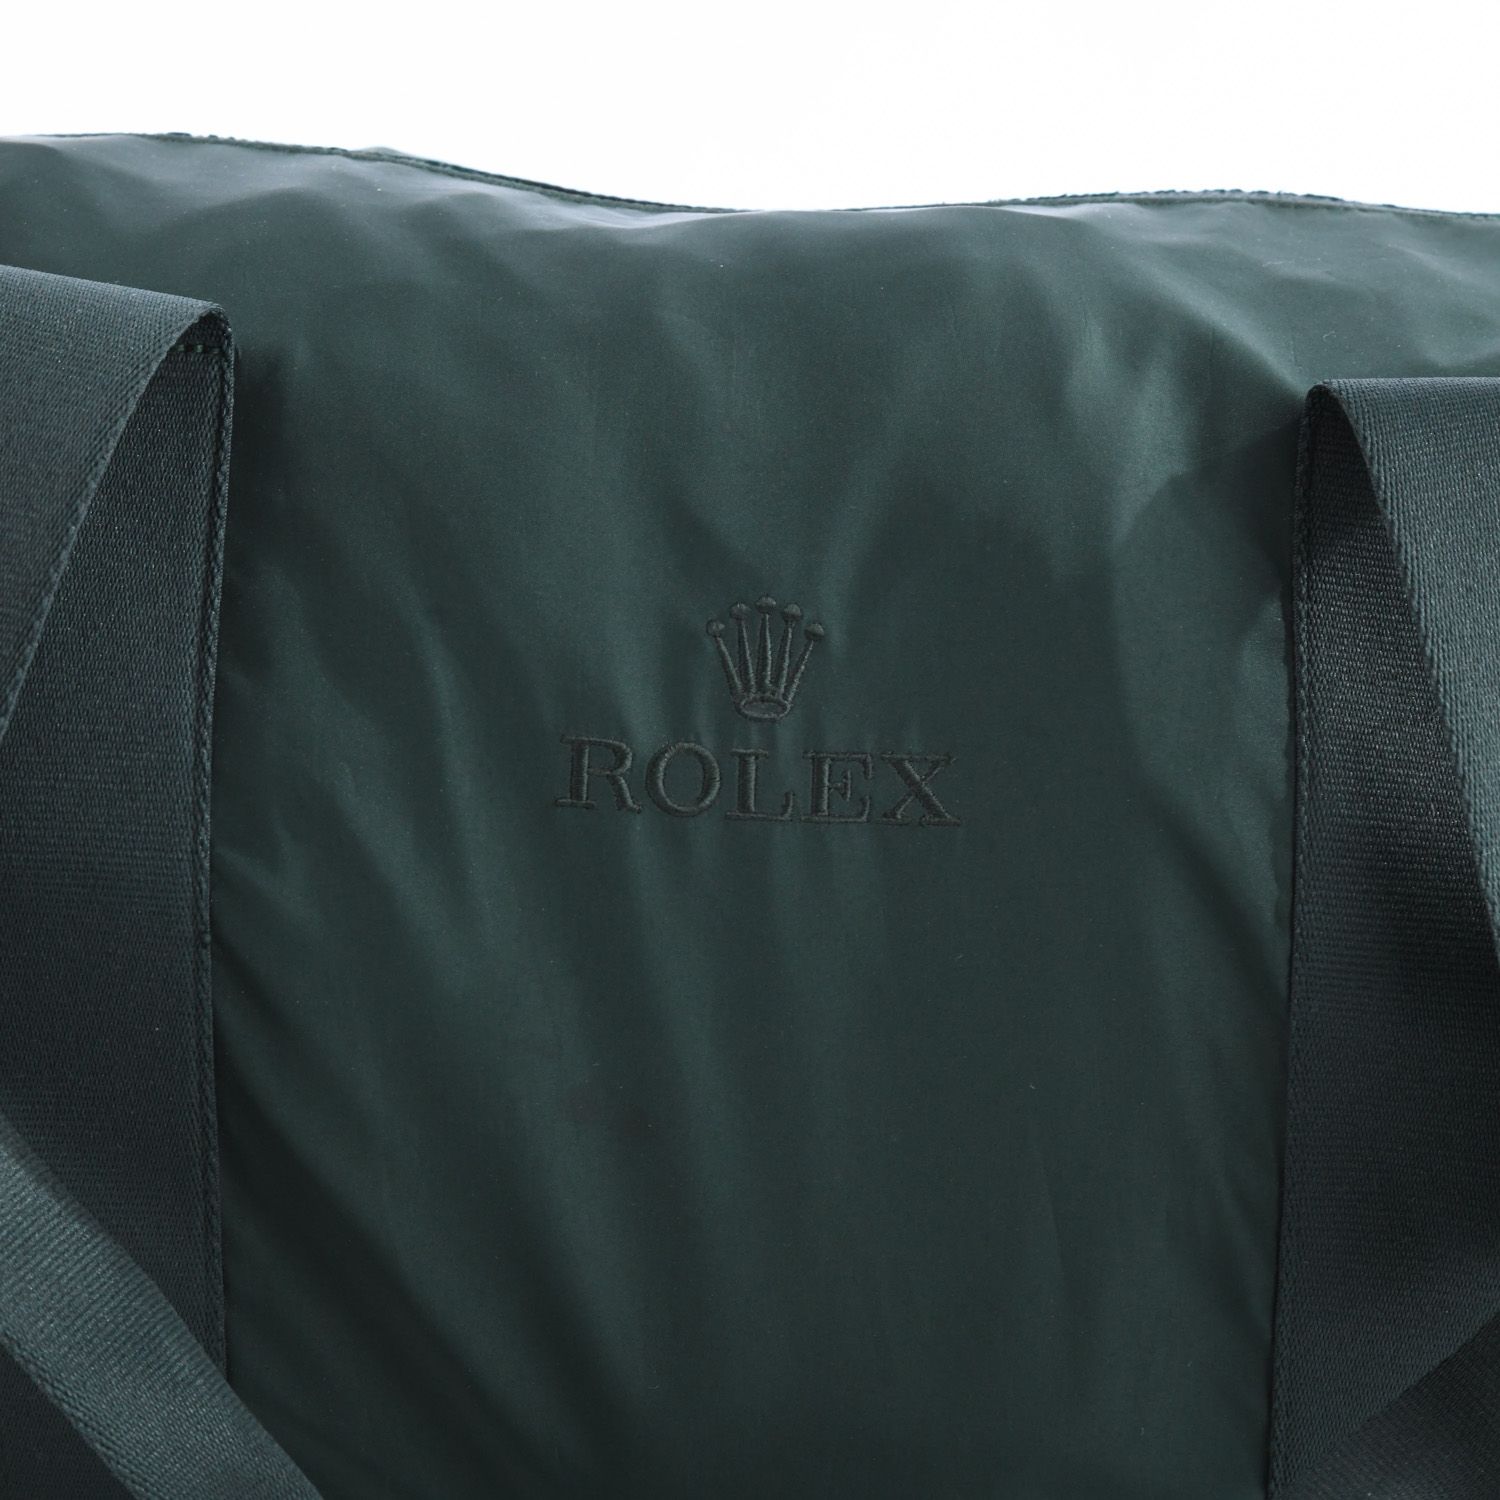 Rolex 1980s Duffel Bag